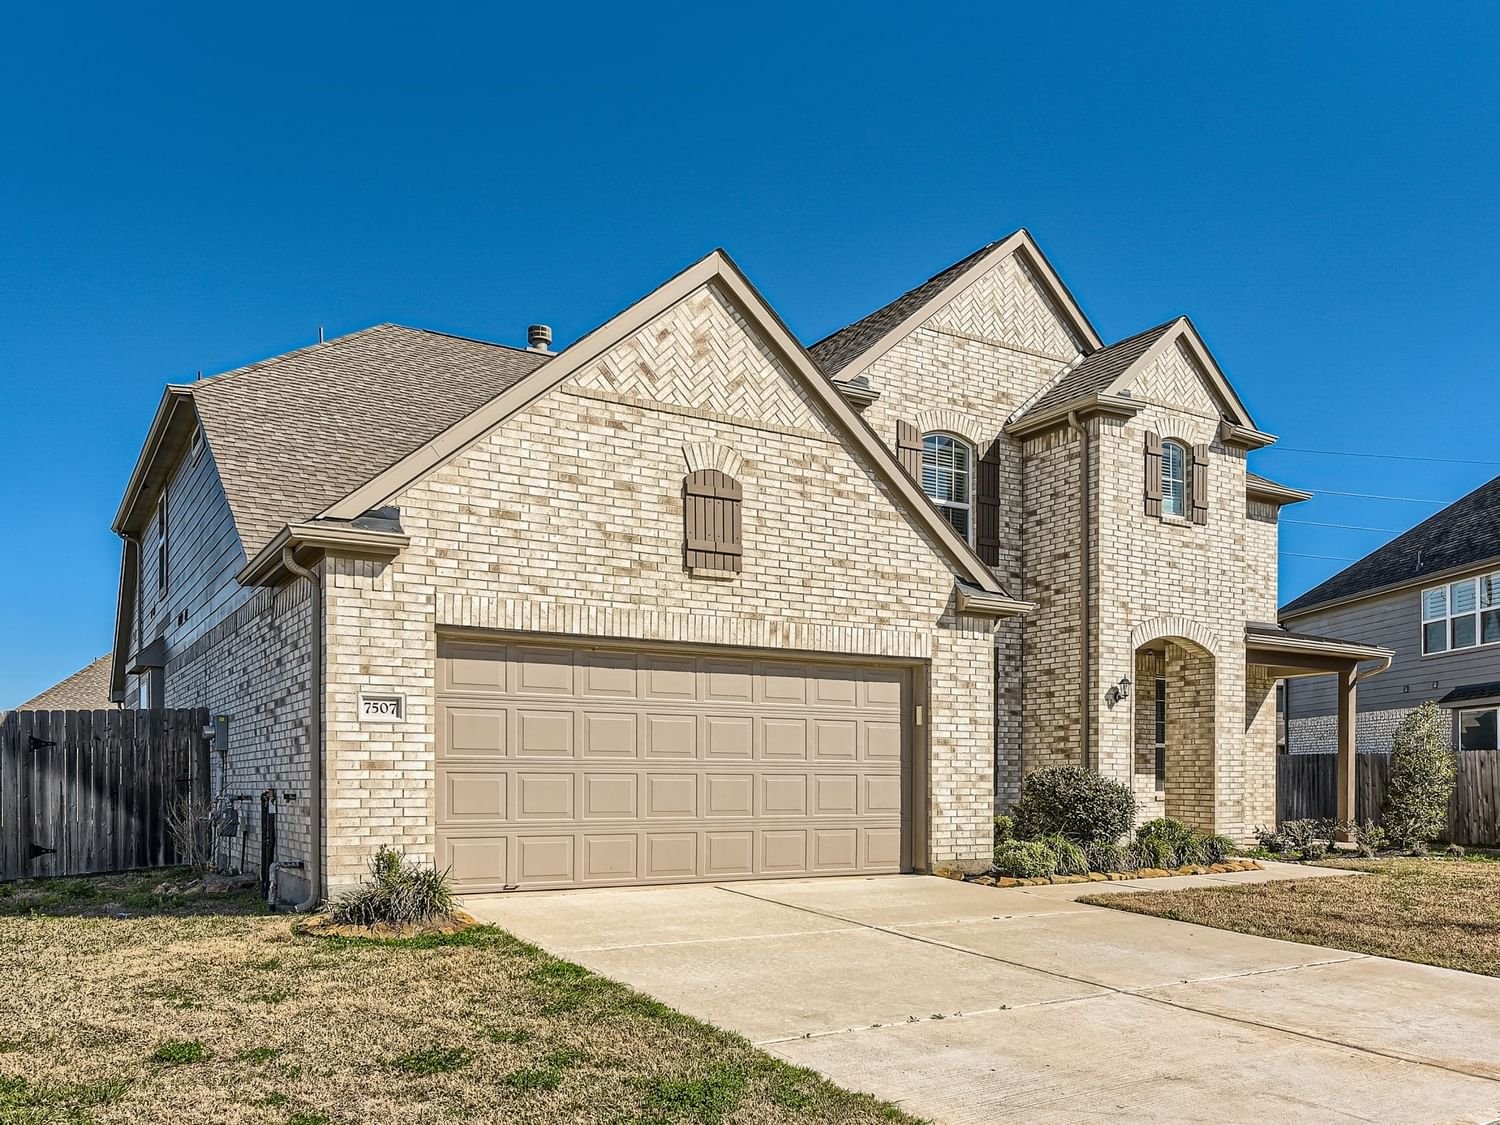 Real estate property located at 7507 Barkstone, Fort Bend, Walnut Creek Sec 19, Rosenberg, TX, US